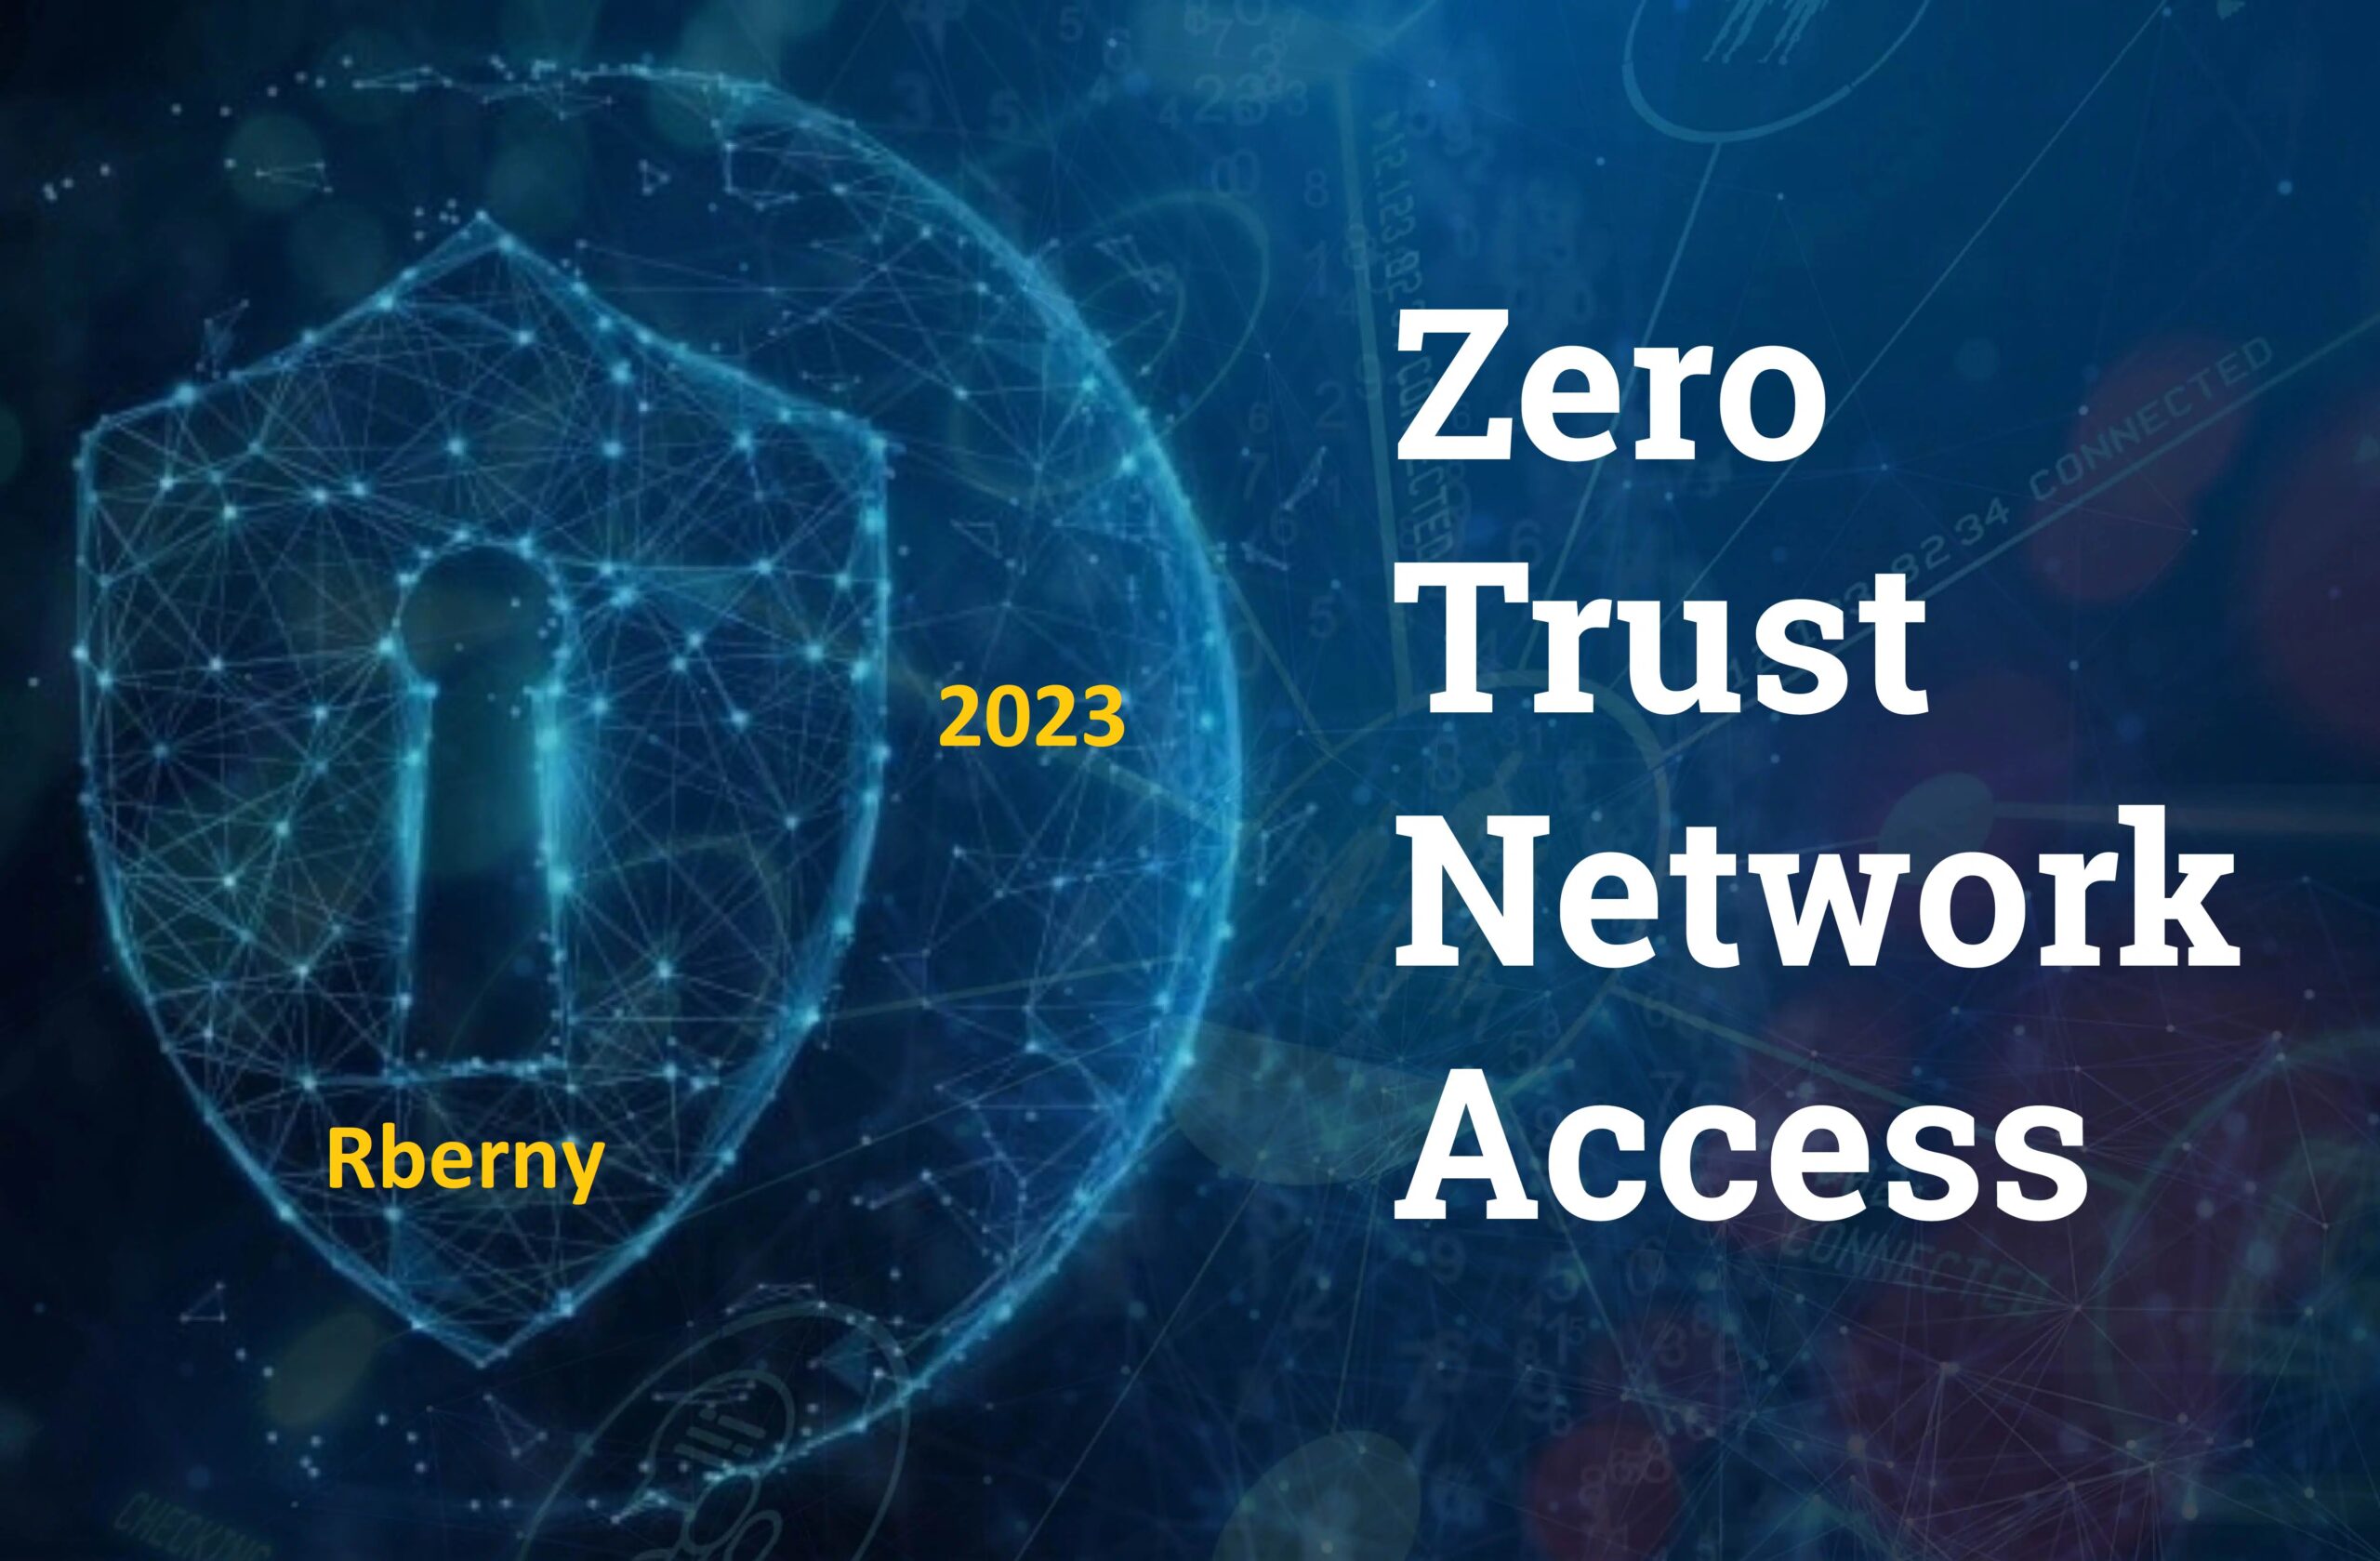 Zero Trust Network Access Rberny 2023